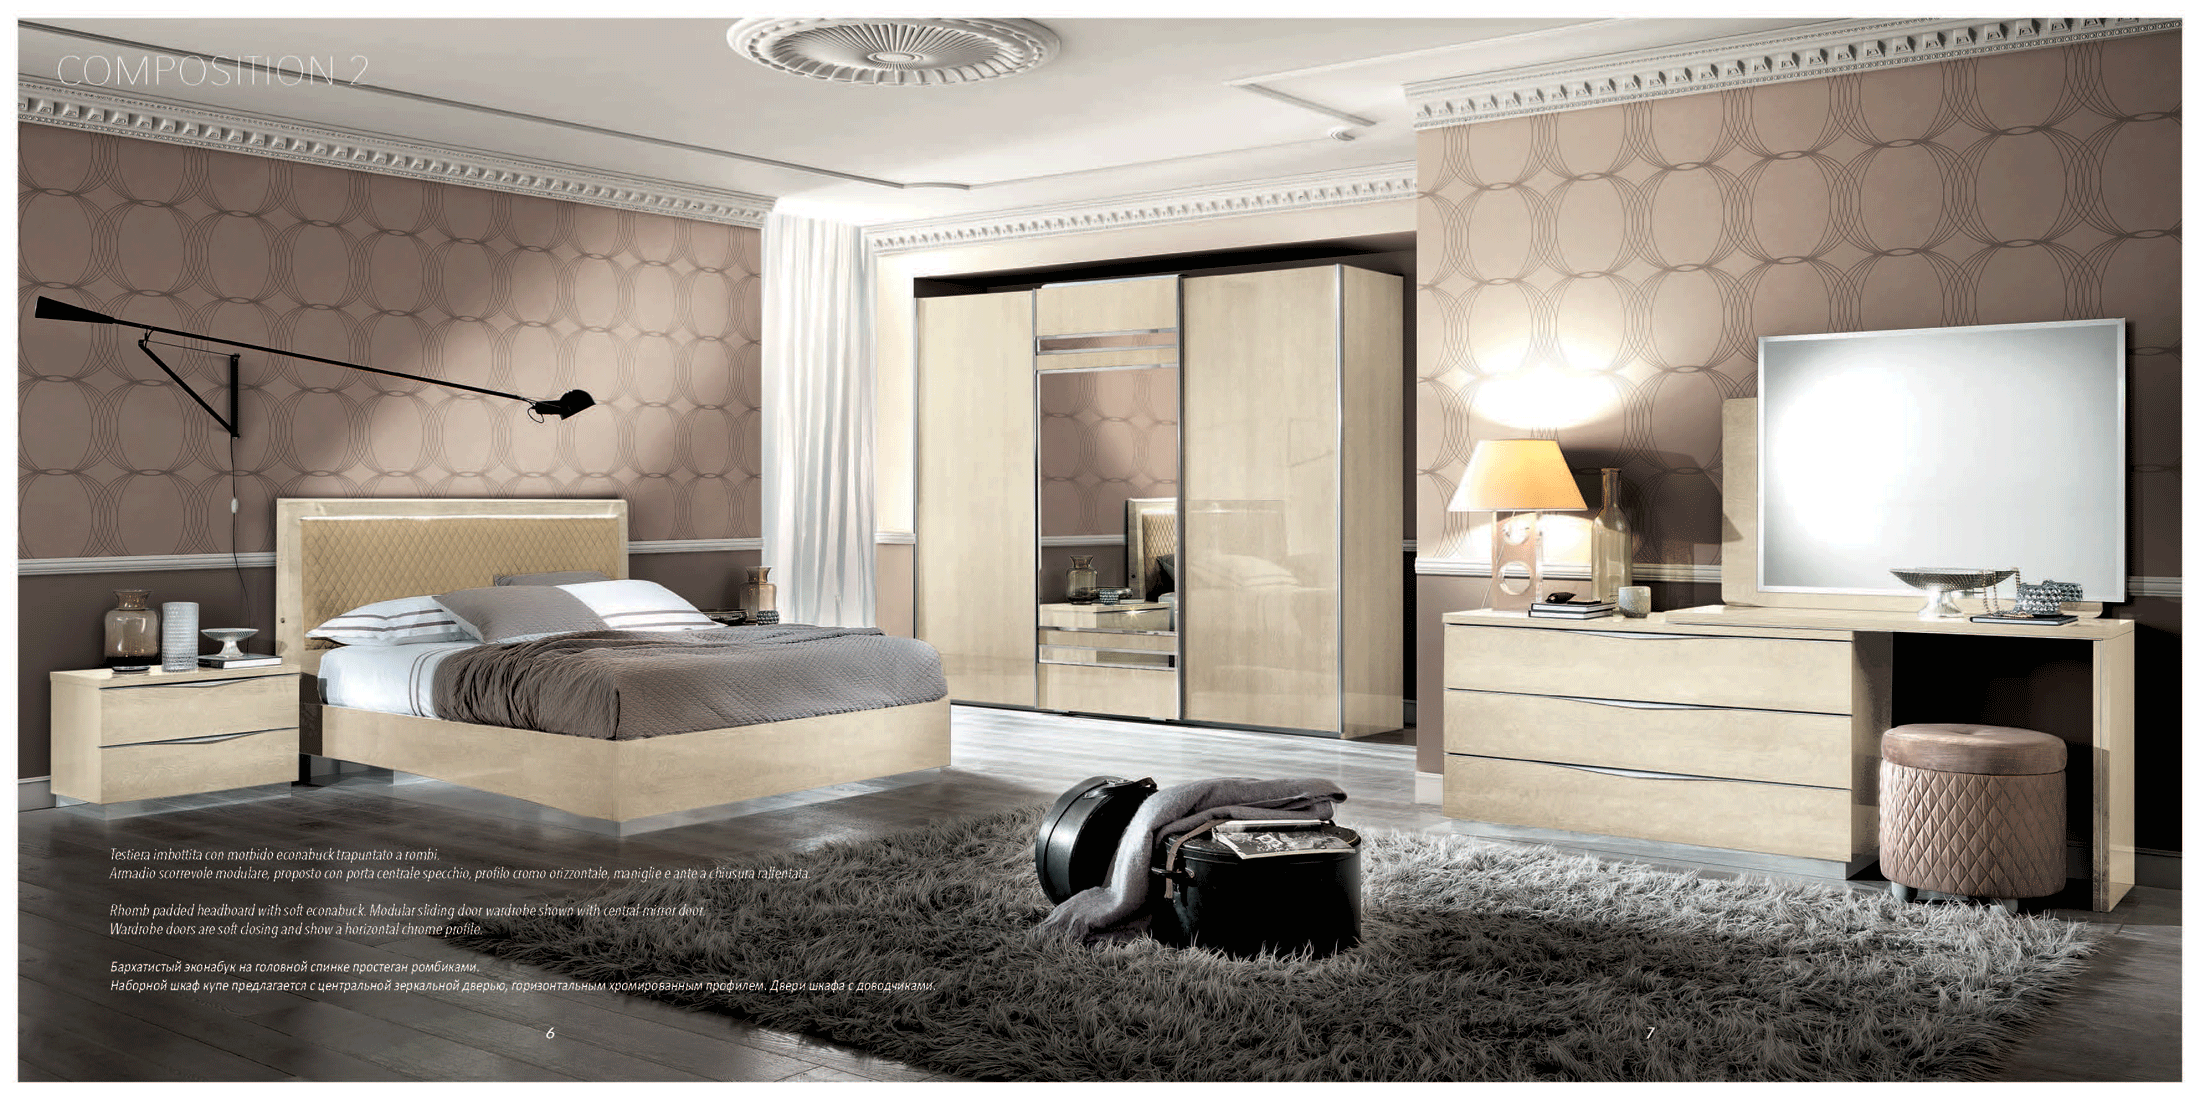 Bedroom Furniture Beds with storage Platinum Additional Items IVORY BETULLIA SABBIA